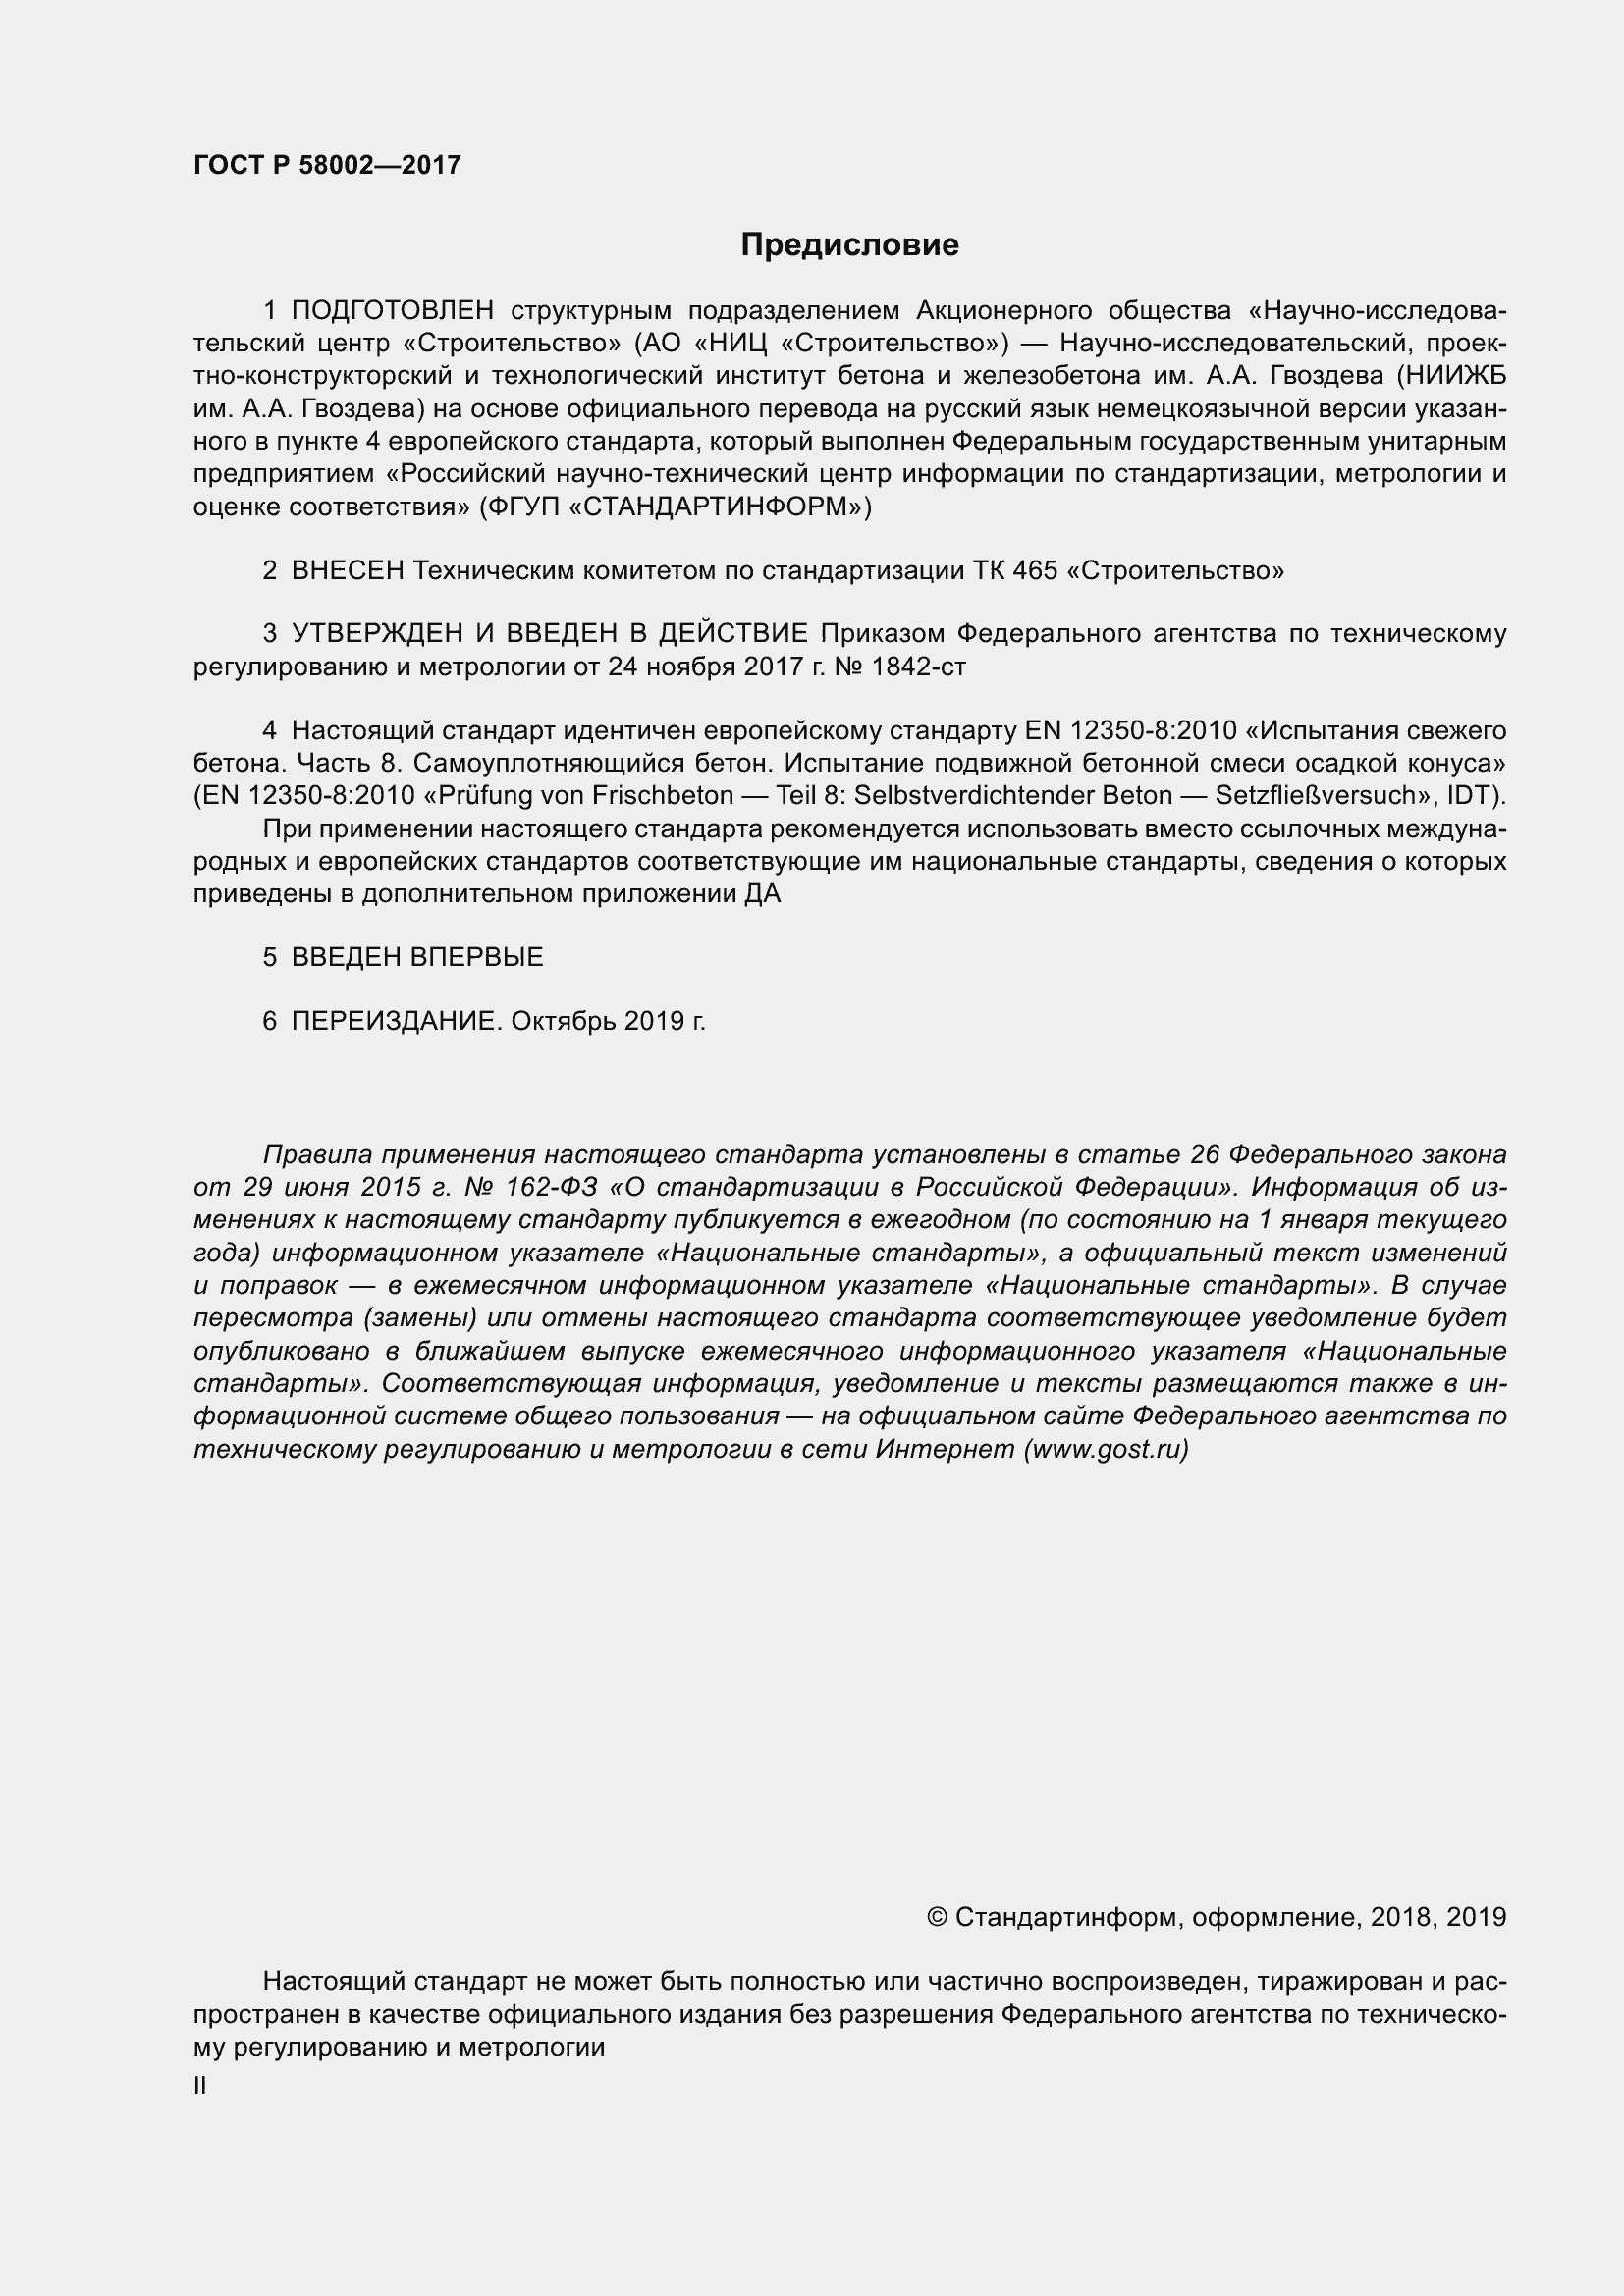 ГОСТ Р 58002-2017. Страница 2